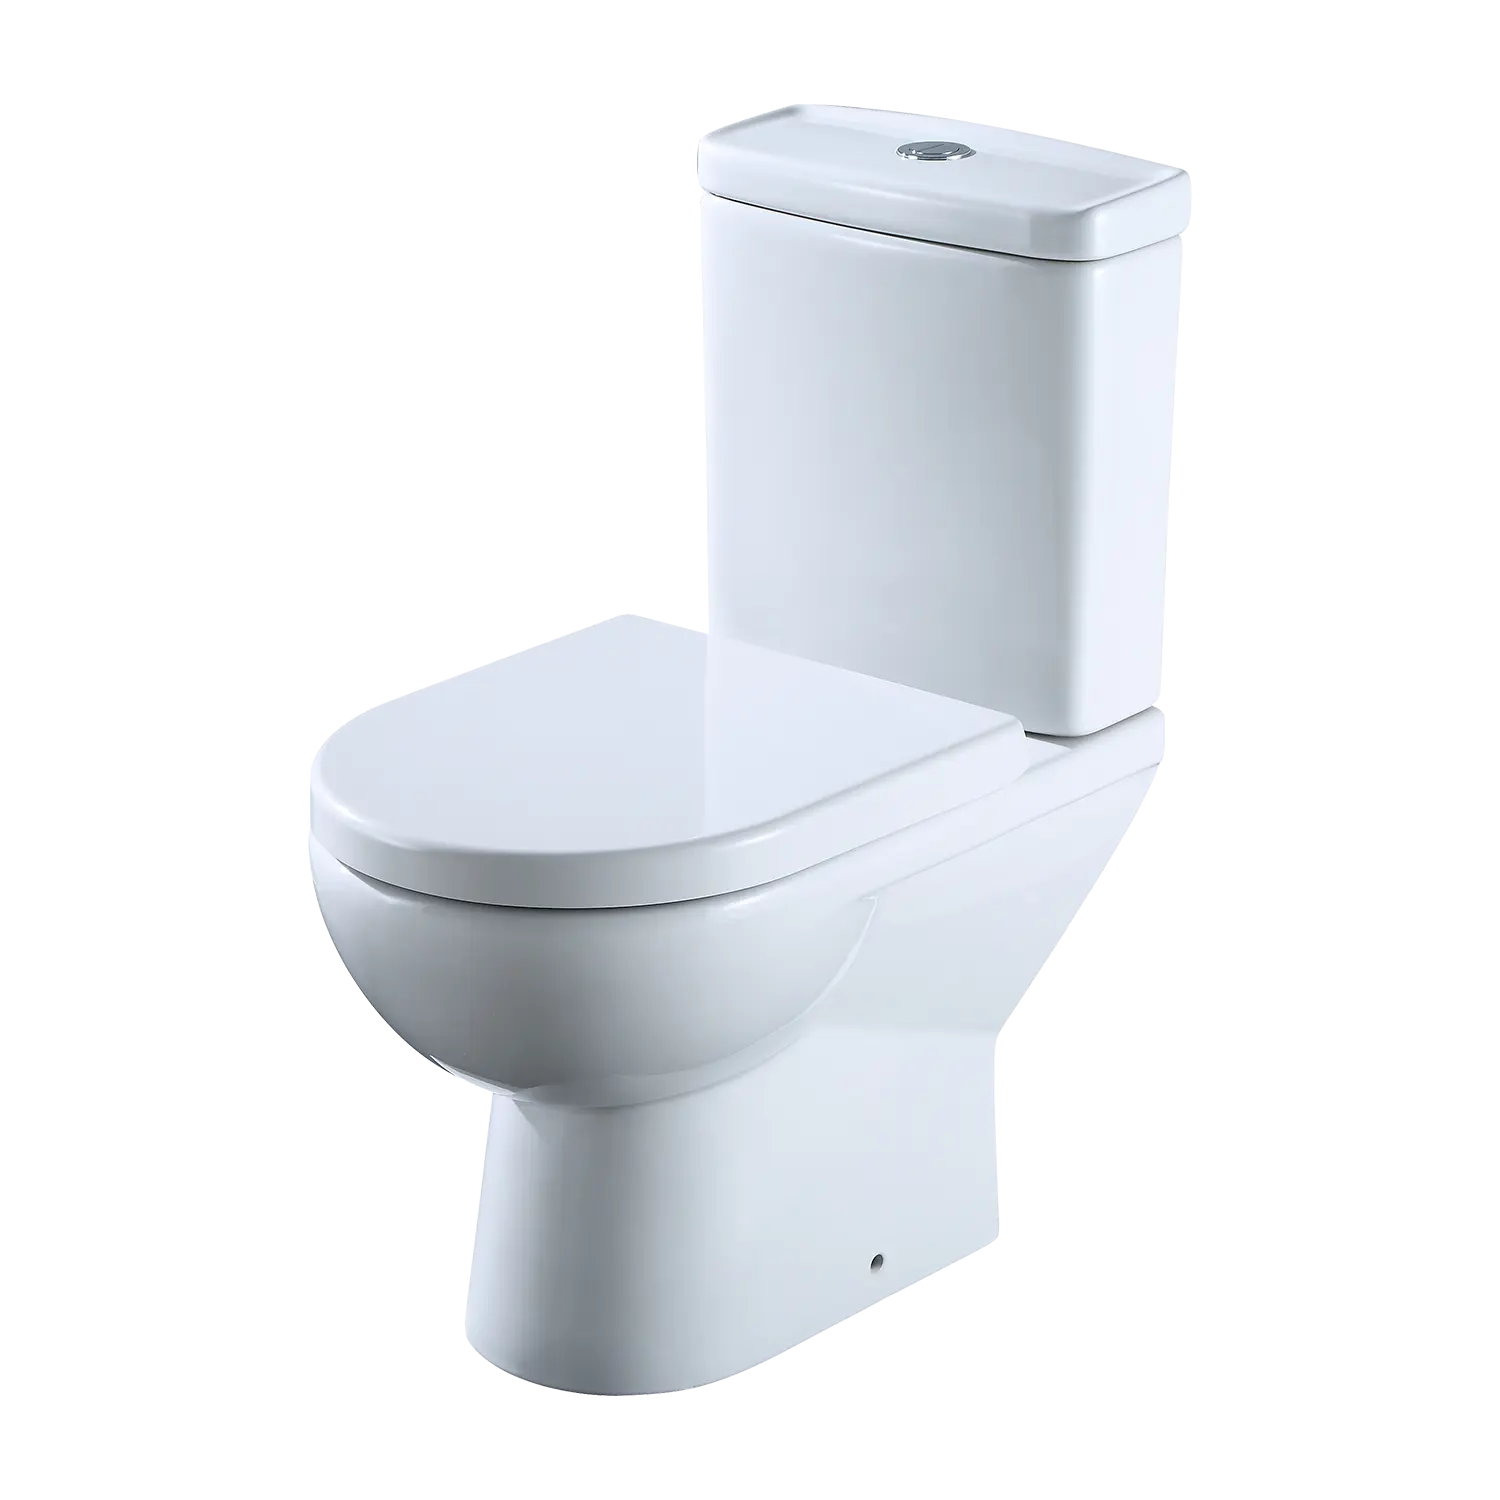 Sanitaryware yeni tasarım seramik tuvalet modern hızlı bırakma koltuk iki adet seramik tuvalet